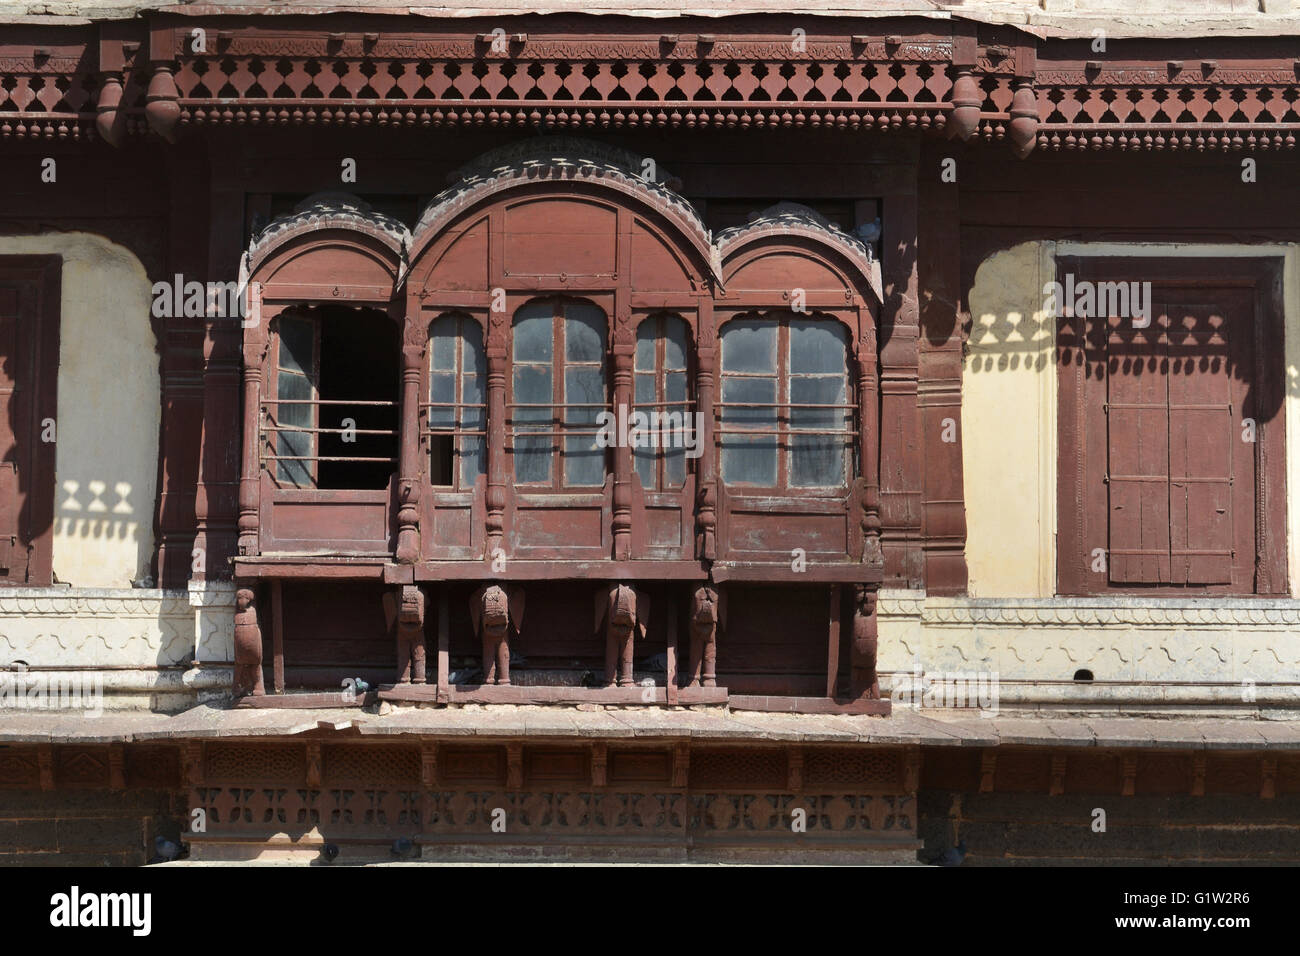 Decorated arched windows with pillars in Indore Palace or Rajwada, Indore, Madhya Pradesh, India Stock Photo